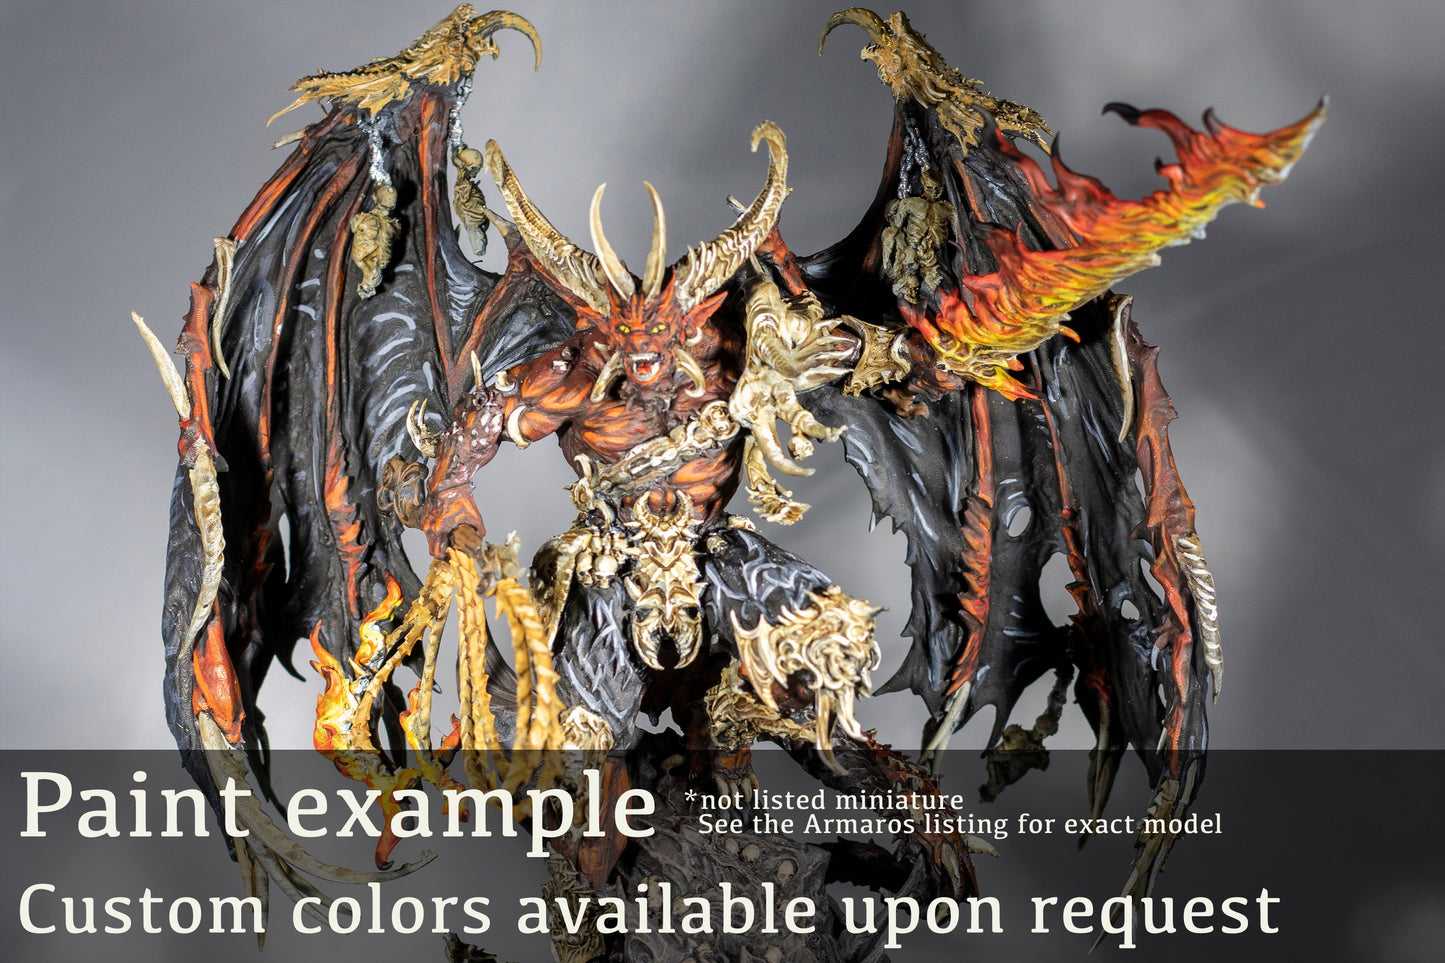 Morlock Predator - Archvillain Games Printed Miniature | Dungeons & Dragons | Pathfinder | Tabletop